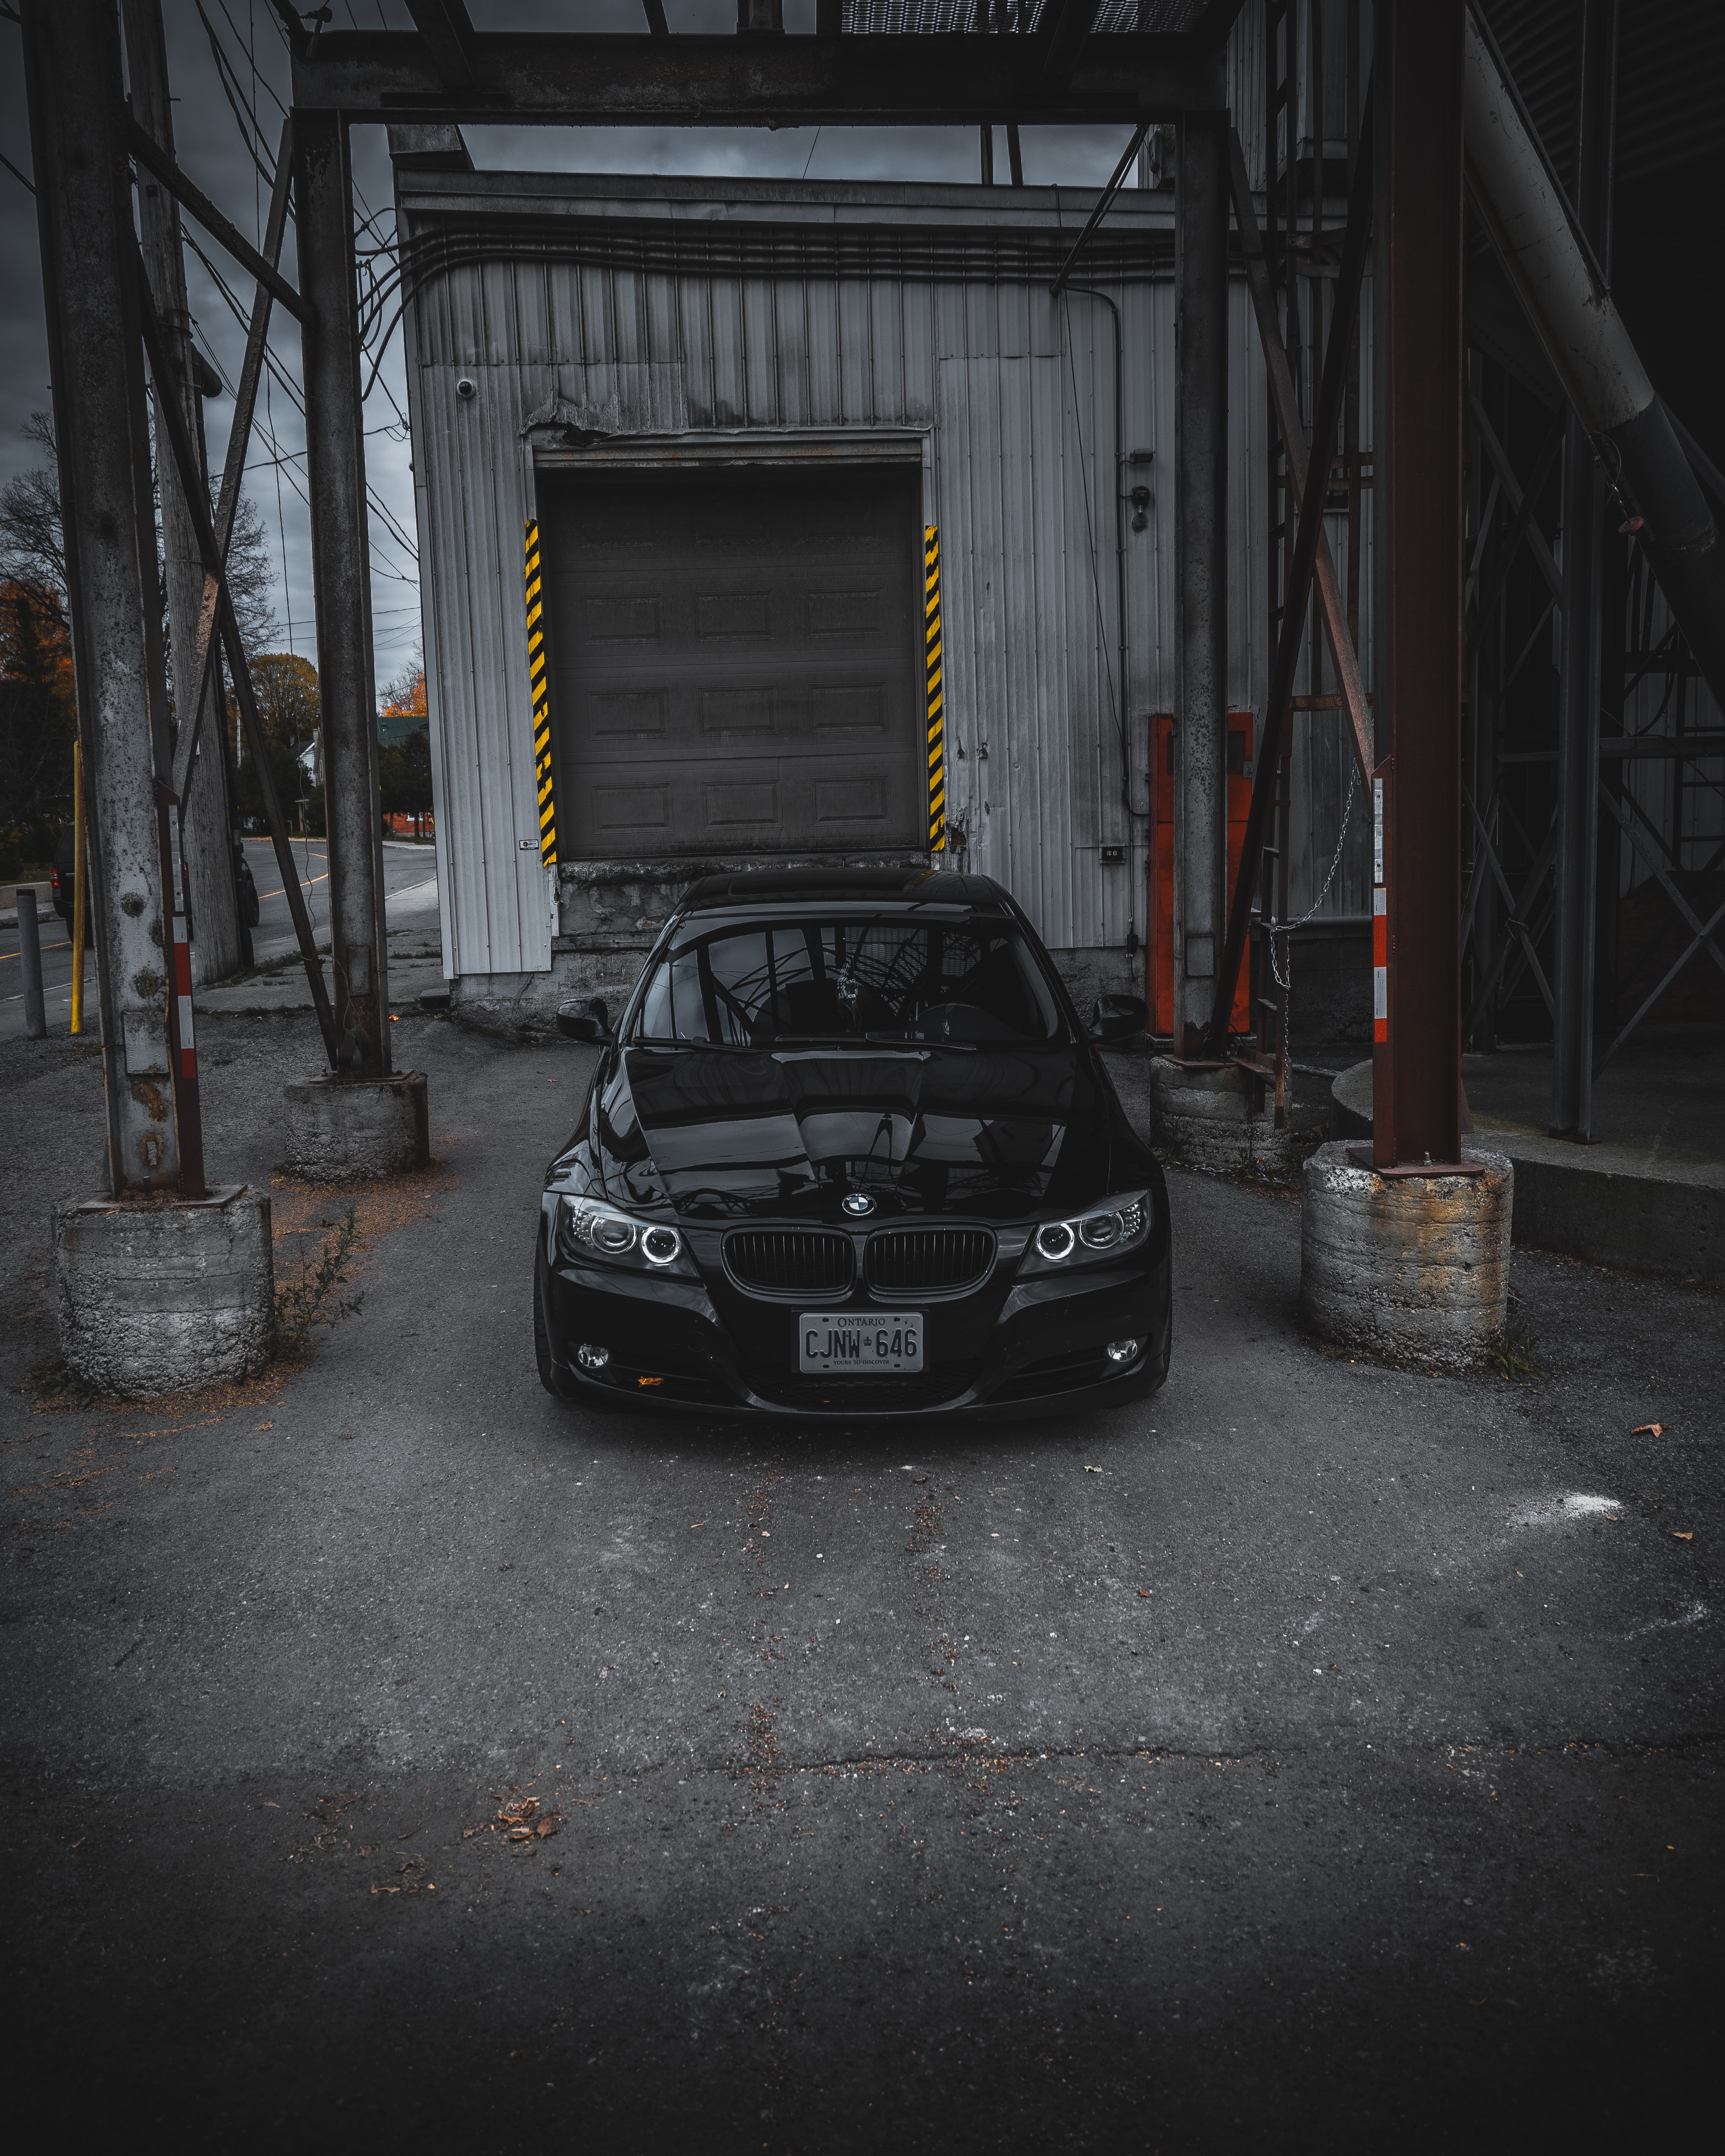 bmw, cars, car, black, front view, garage